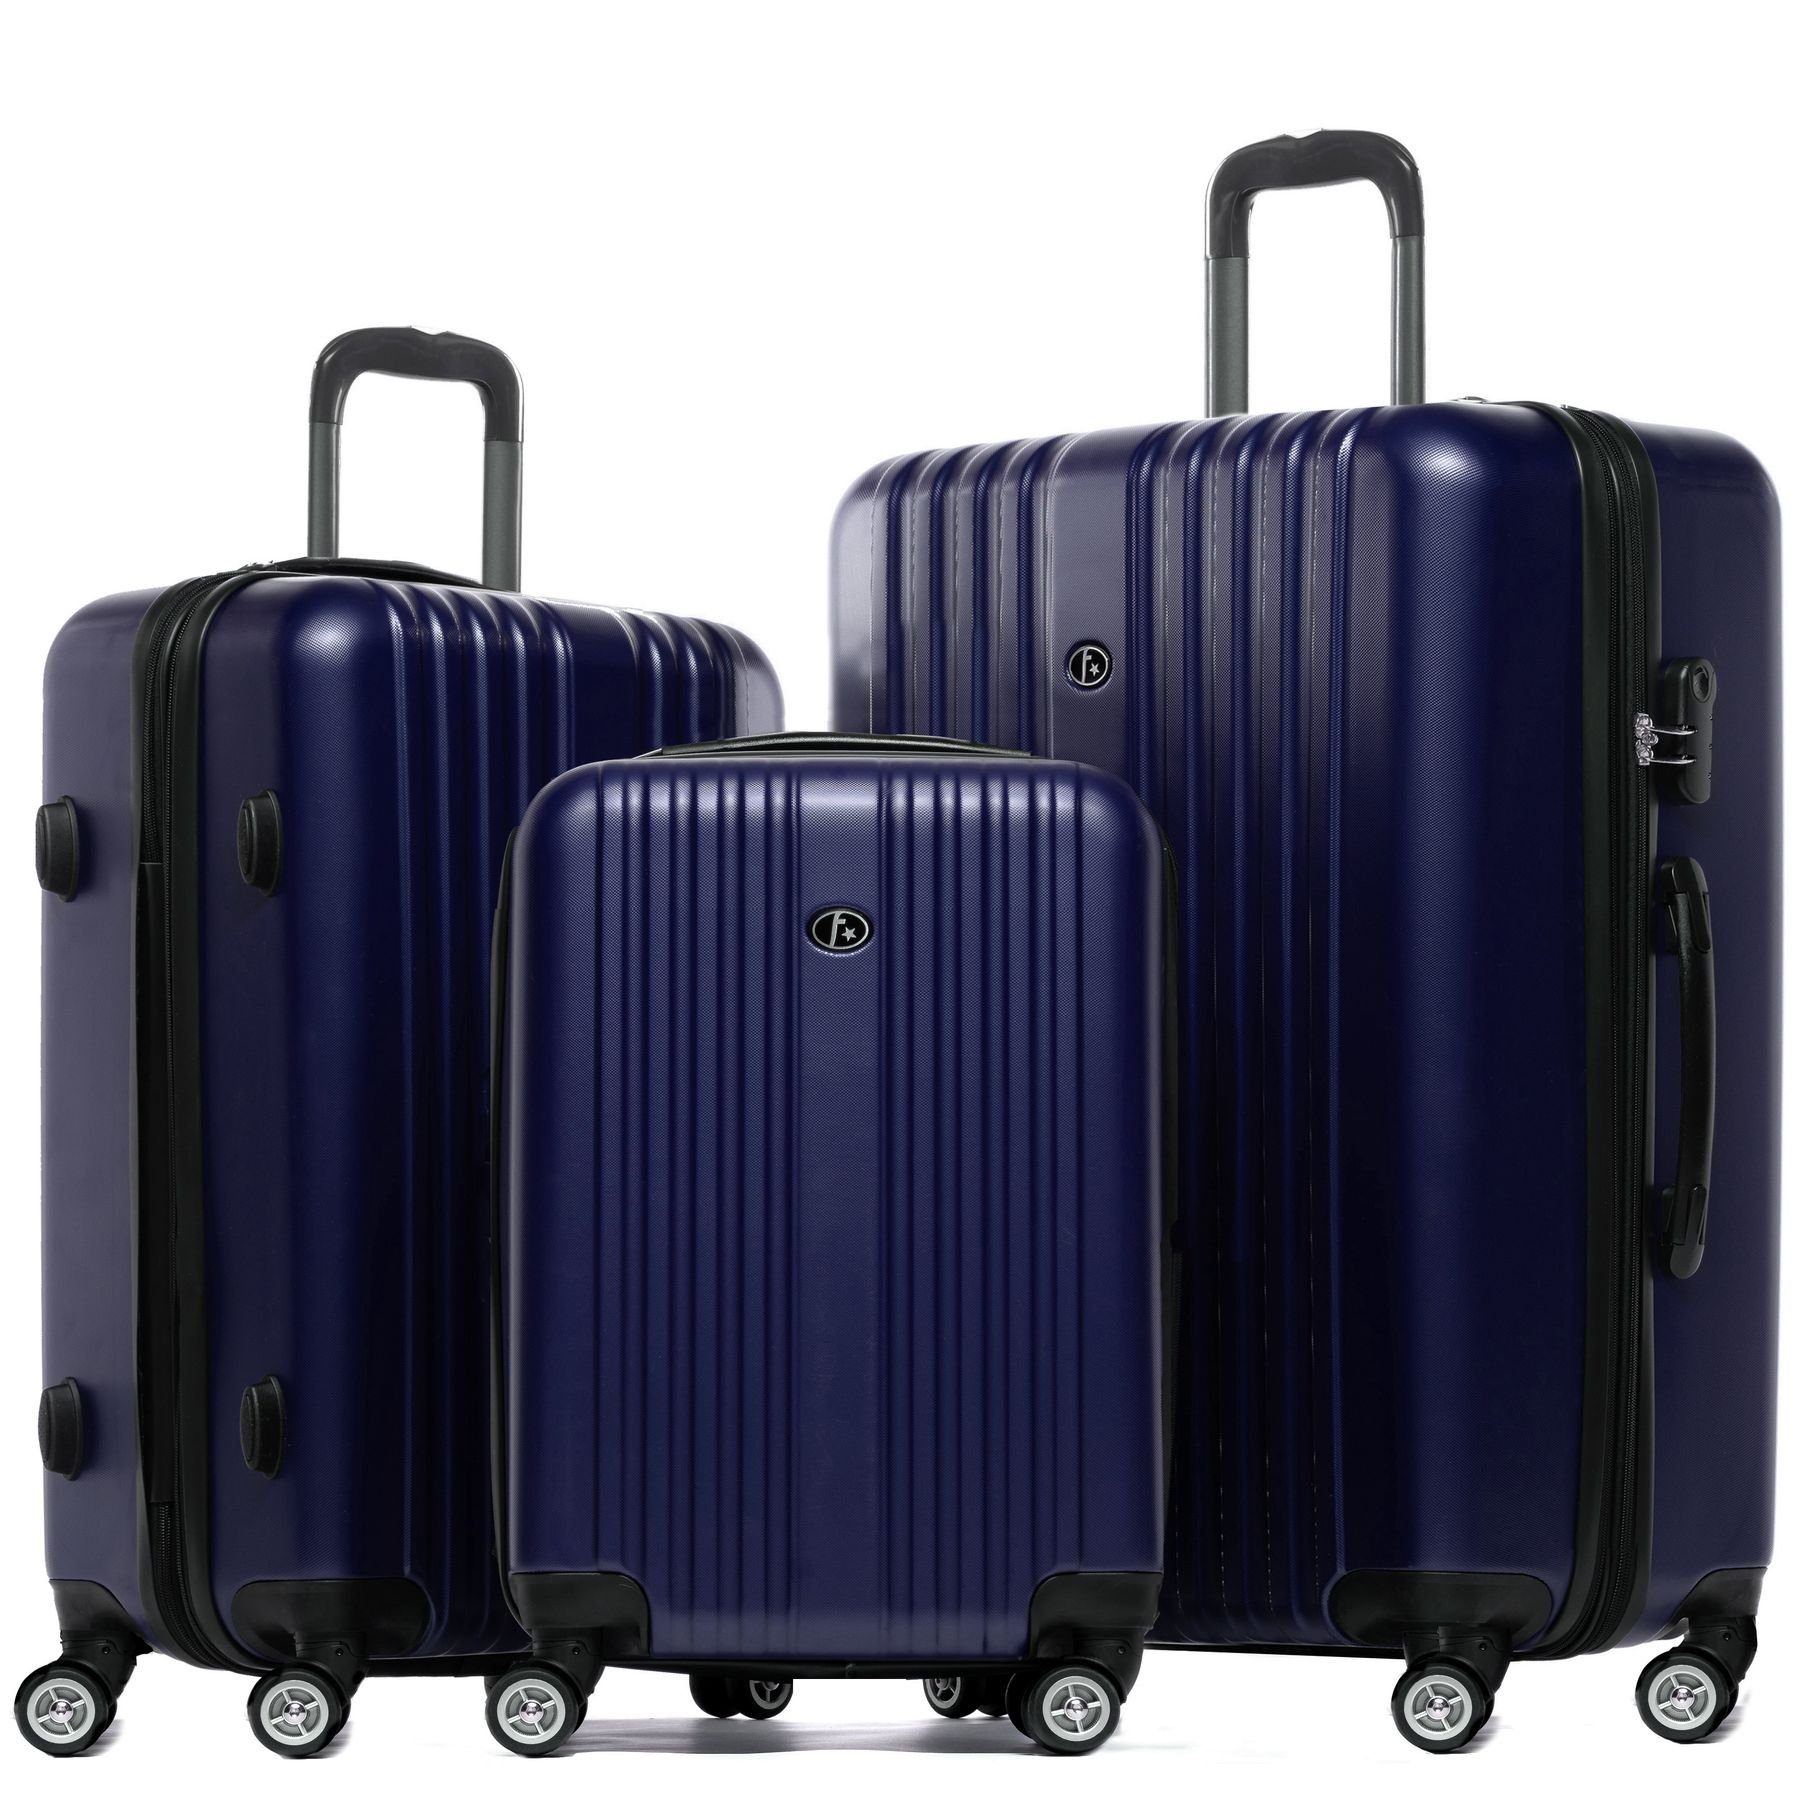 FERGÉ Kofferset 3 teilig Hartschale erweiterbar Toulouse, Trolley 3er Koffer Set, Reisekoffer 4 Rollen, Premium Rollkoffer dunkelblau